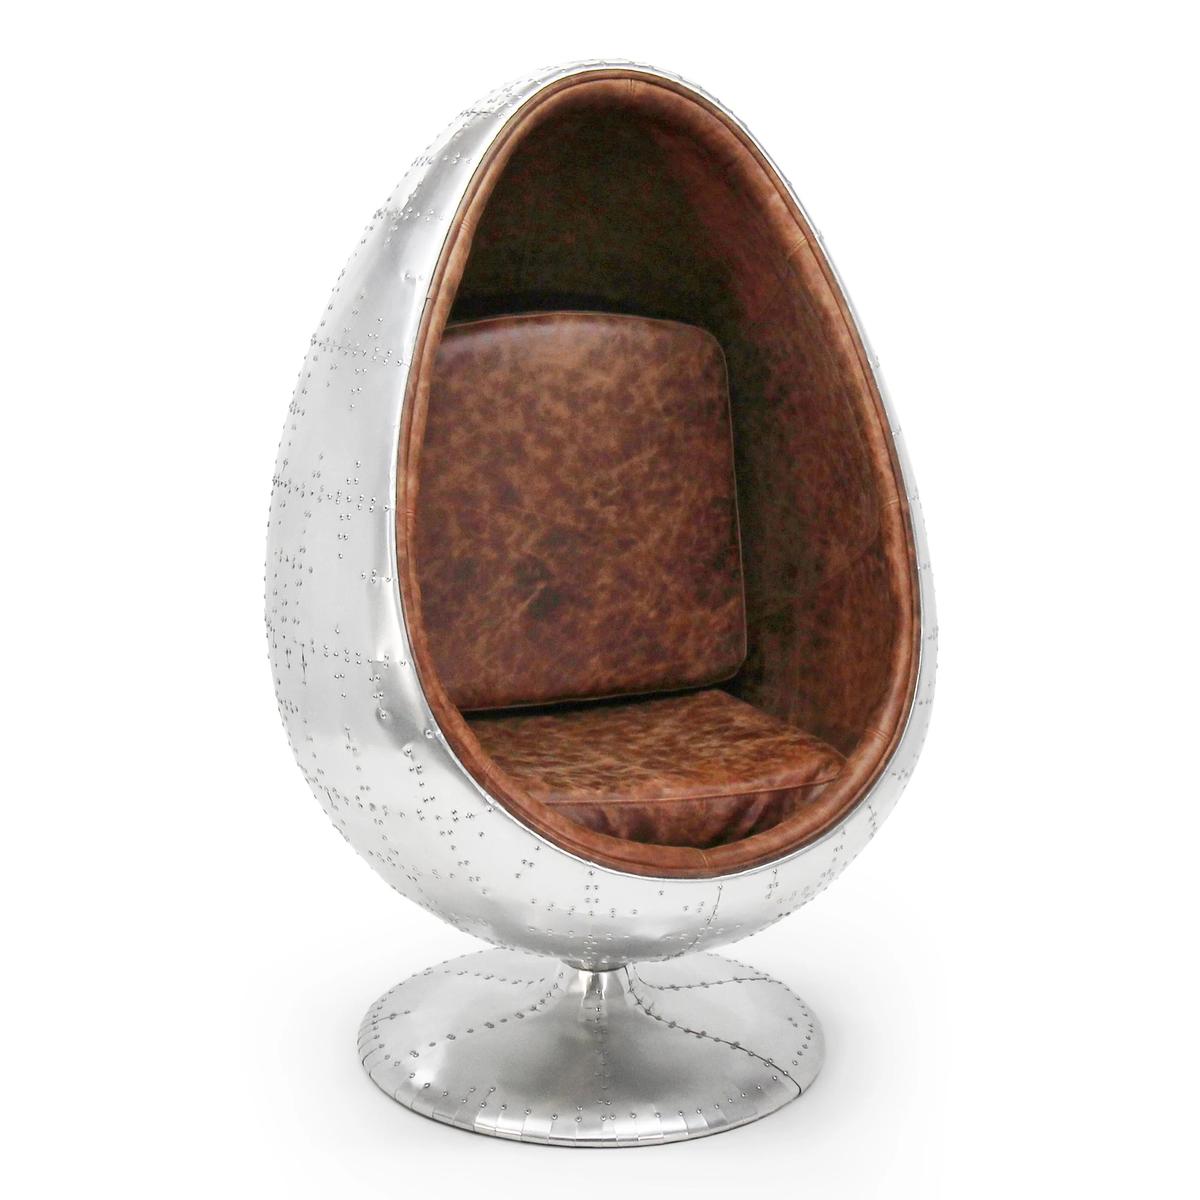 Aviator Egg Pod Easy Chair. (Courtesy of retailers)